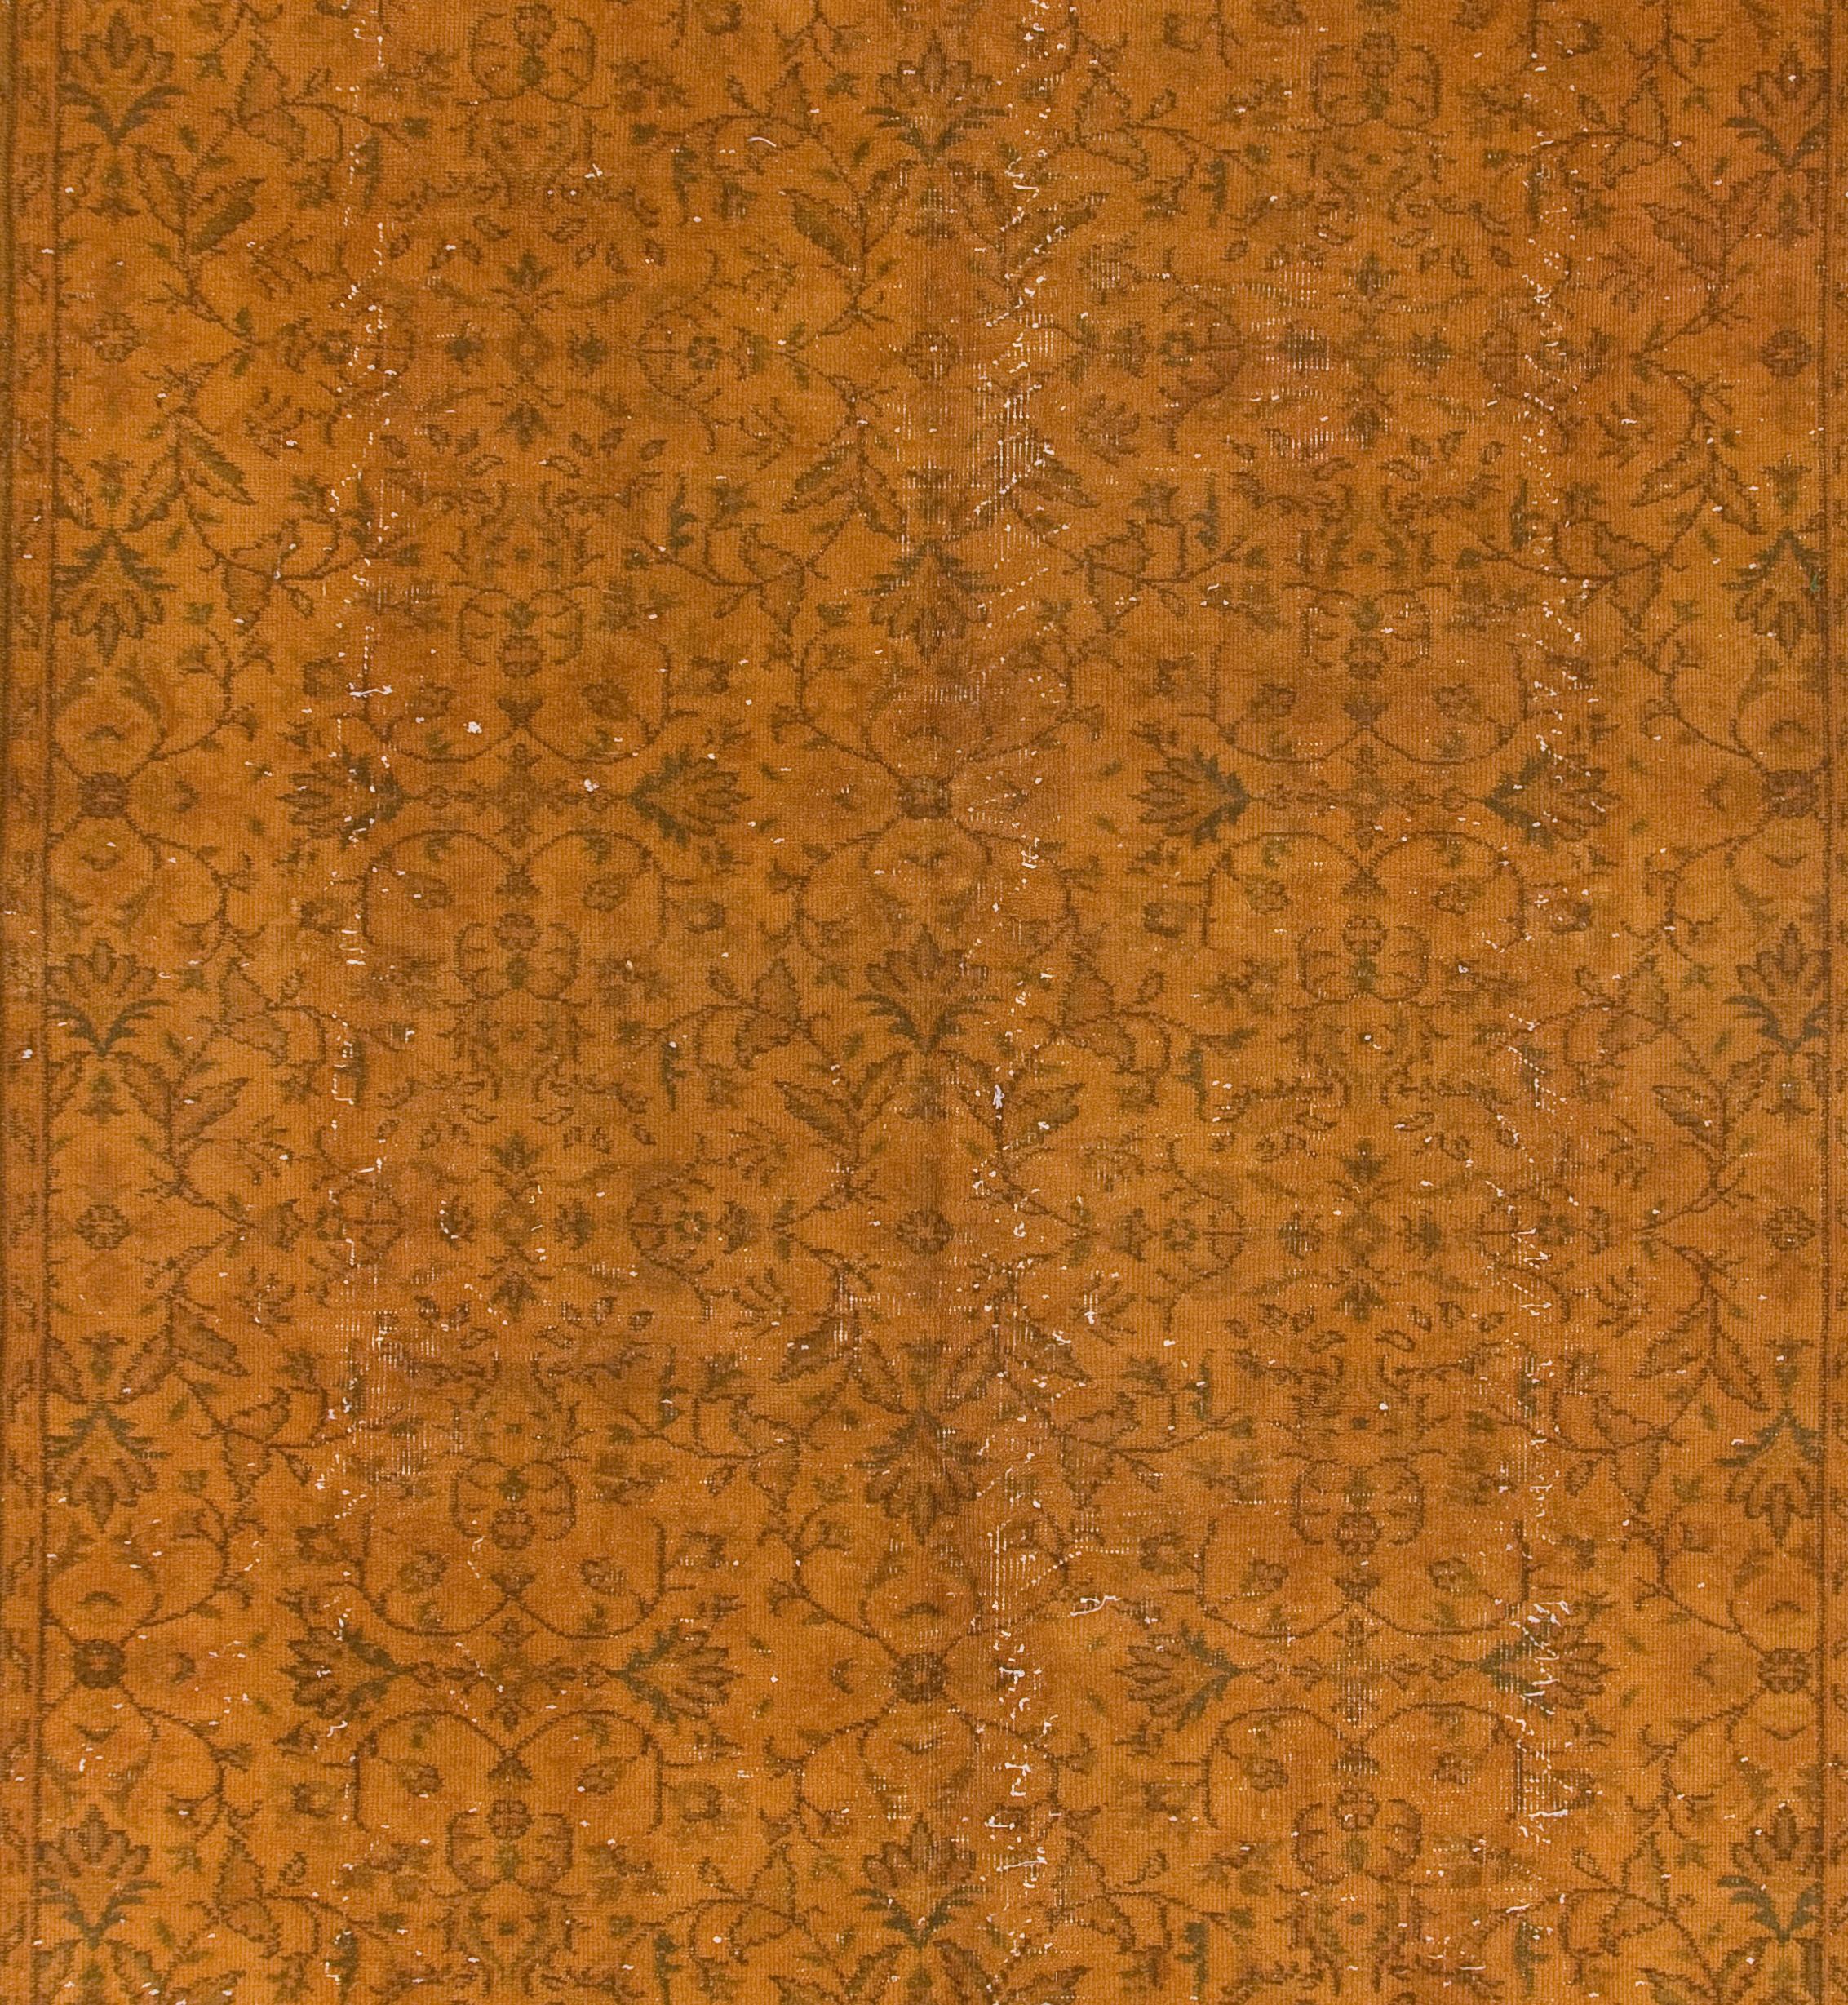 Hand-Knotted 6.7x9.7 Ft Vintage Handmade Floral Turkish Rug in Orange, Home Decor Wool Carpet For Sale